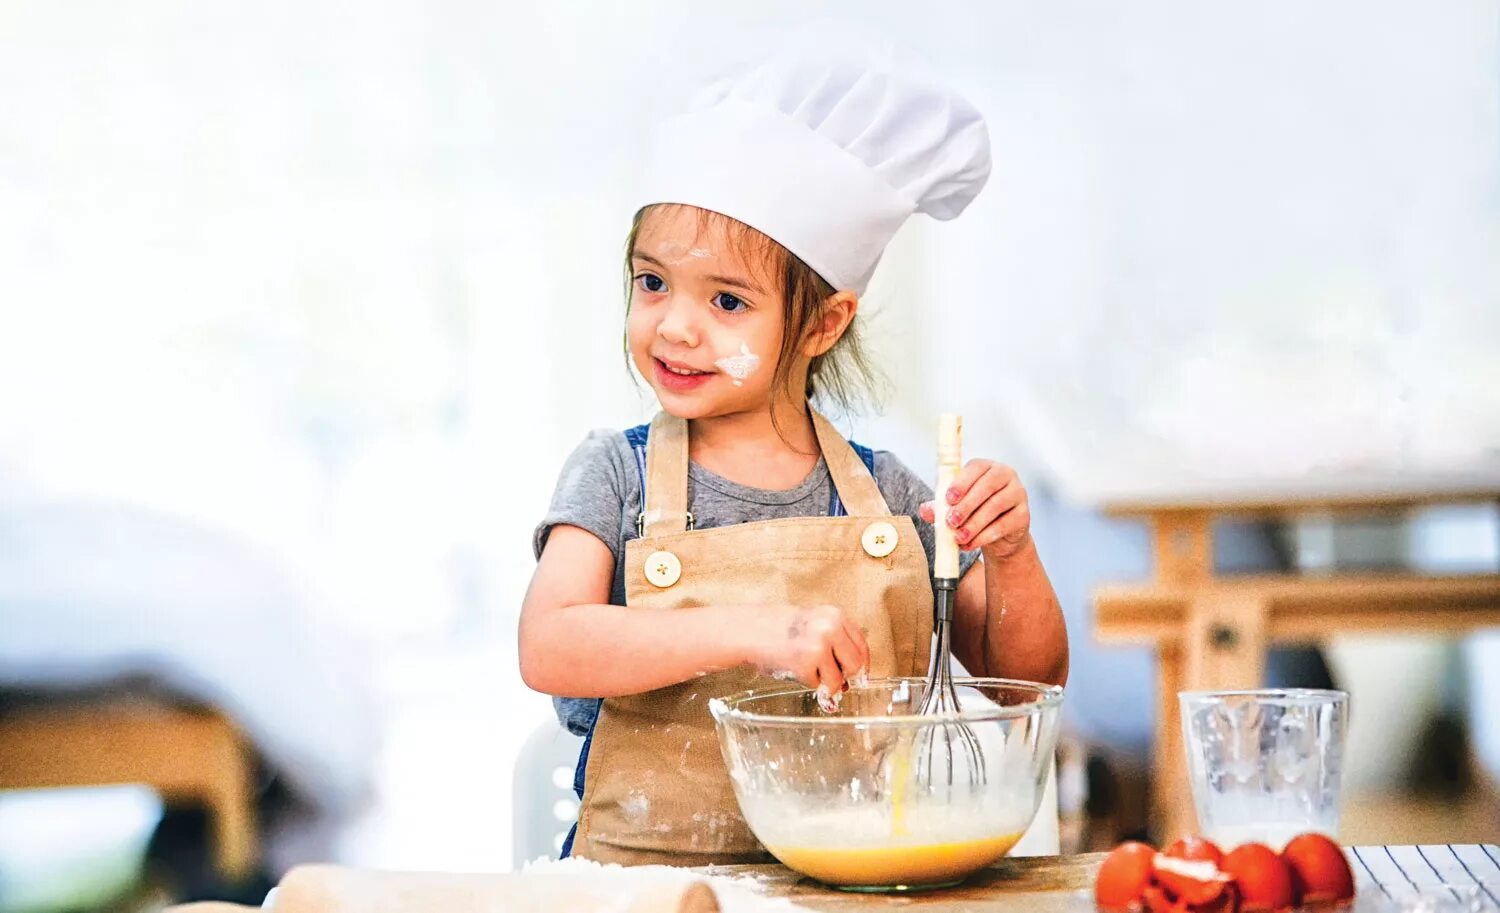 Cooking babies. Детский кулинарный мастер класс. Мастер класс для детей готовка. Повар для детей. Кулинарные мастер классы для детей.